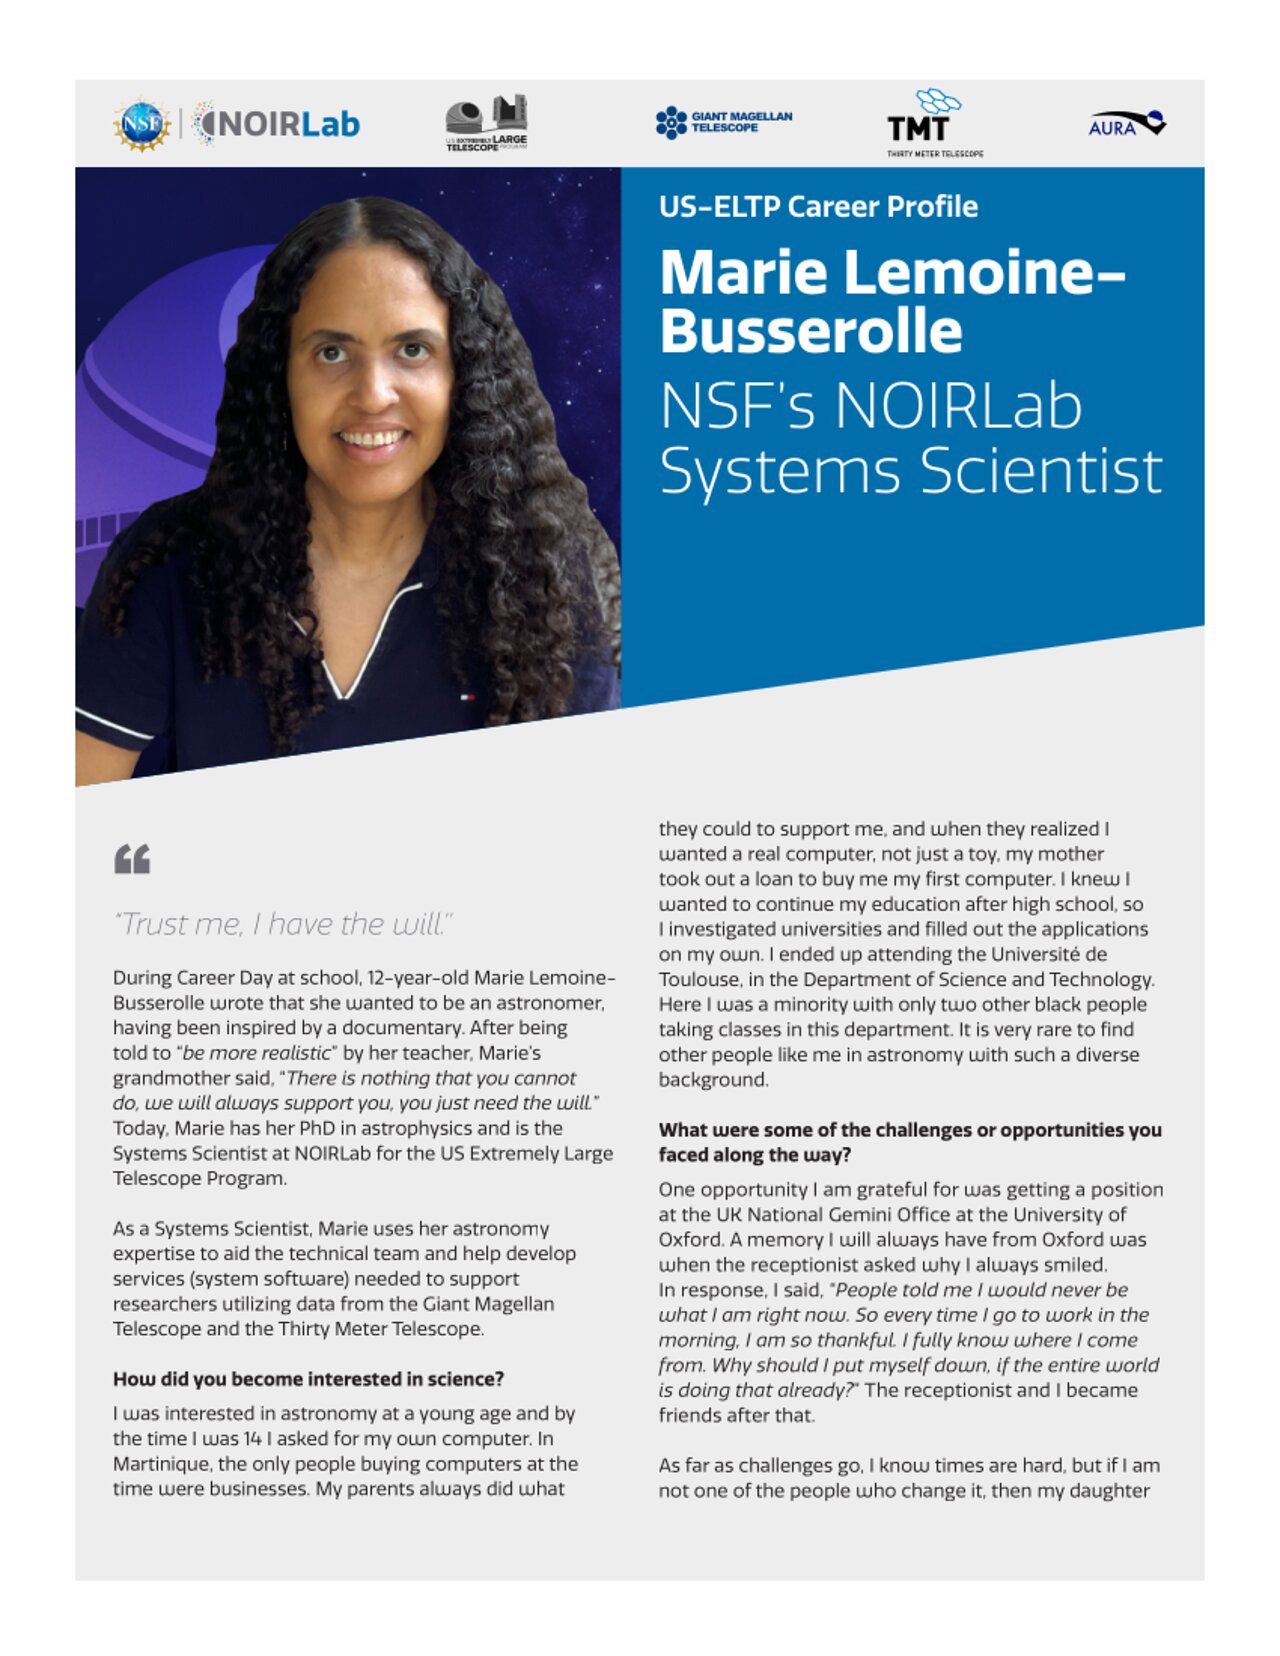 Handouts: US-ELTP Career Profile — Marie Lemoine-Busserolle